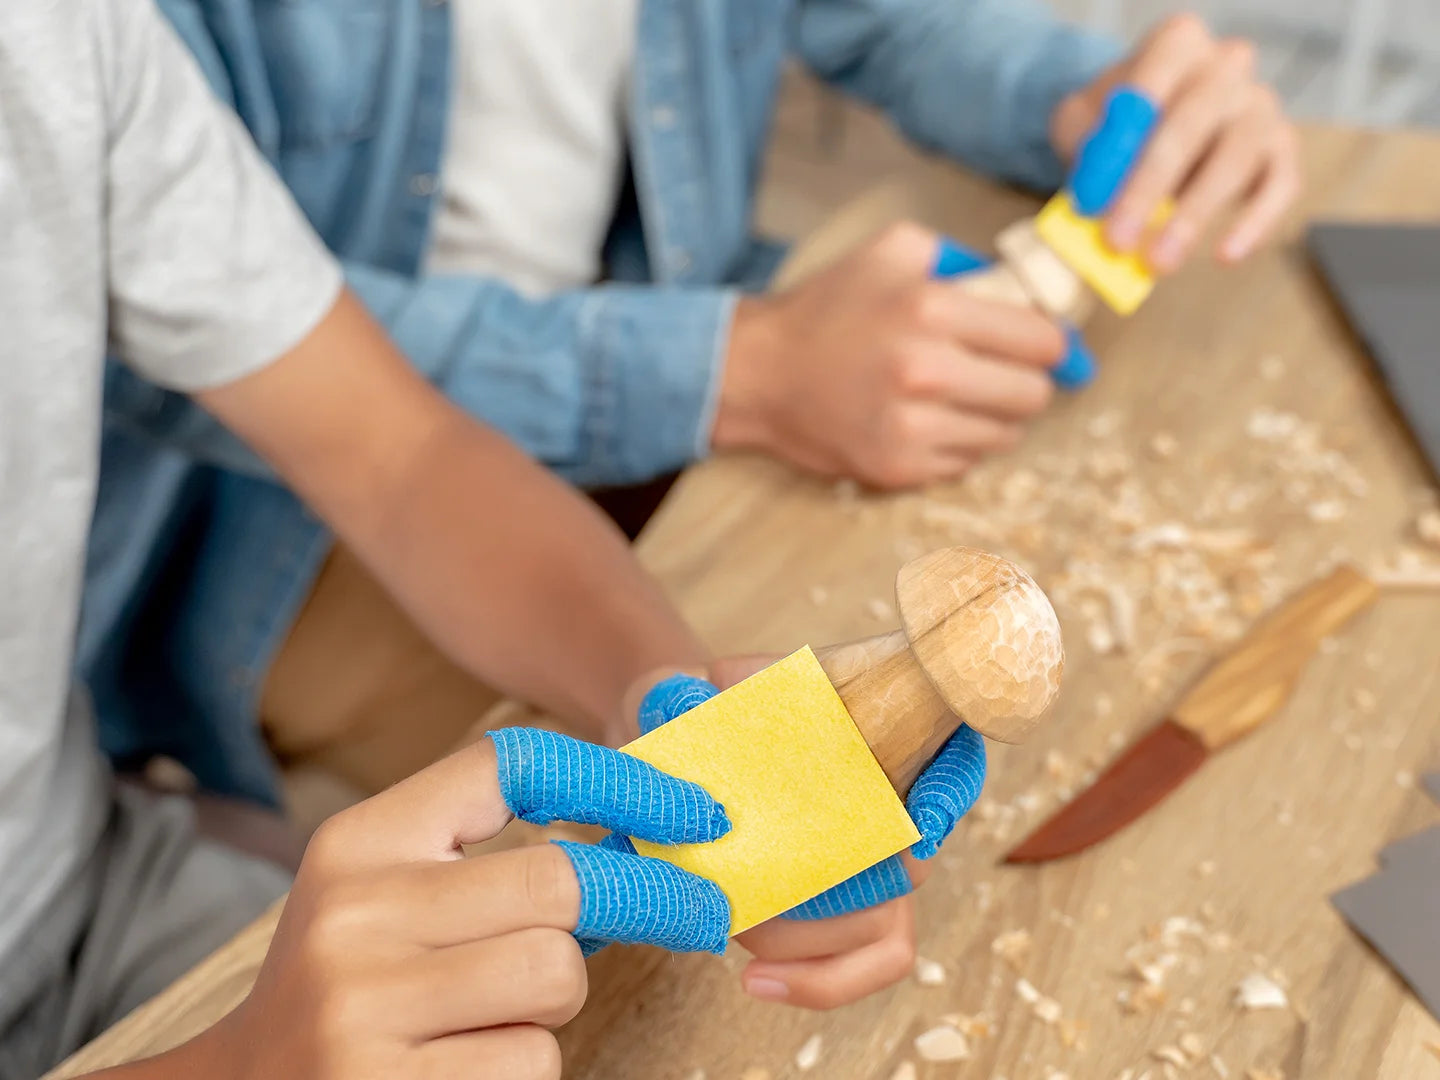 DIY09 - Family Fun Wood Carving Kit